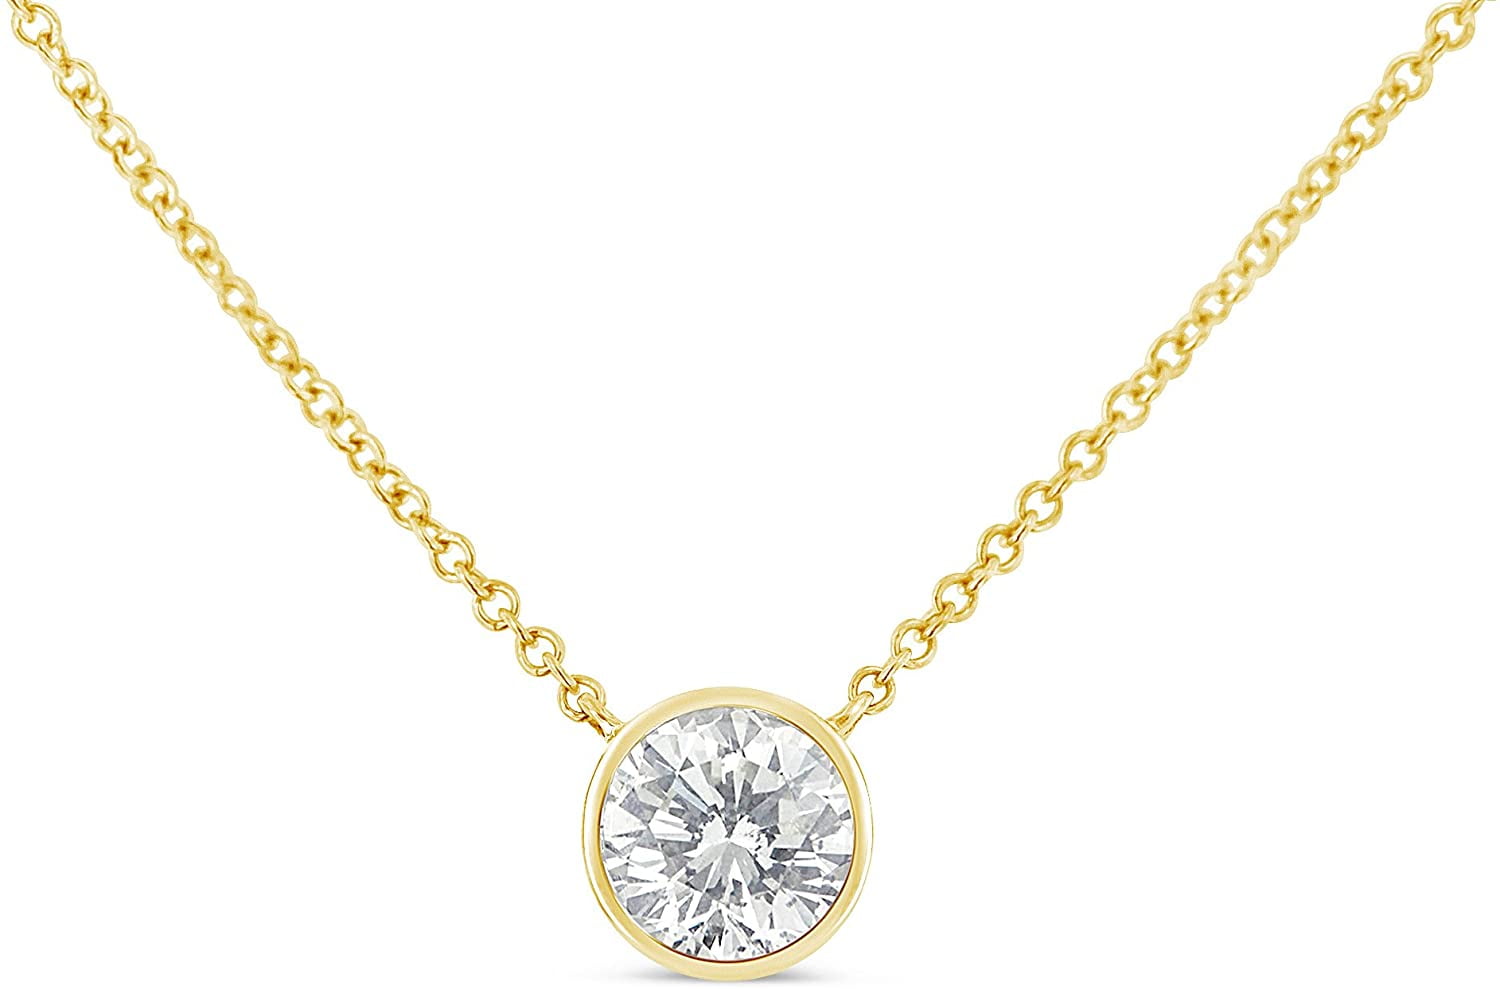 Details about   Bezel Set 1 CT Pink Sapphire Solitaire Pendant Necklace 14k Rose Gold Finish